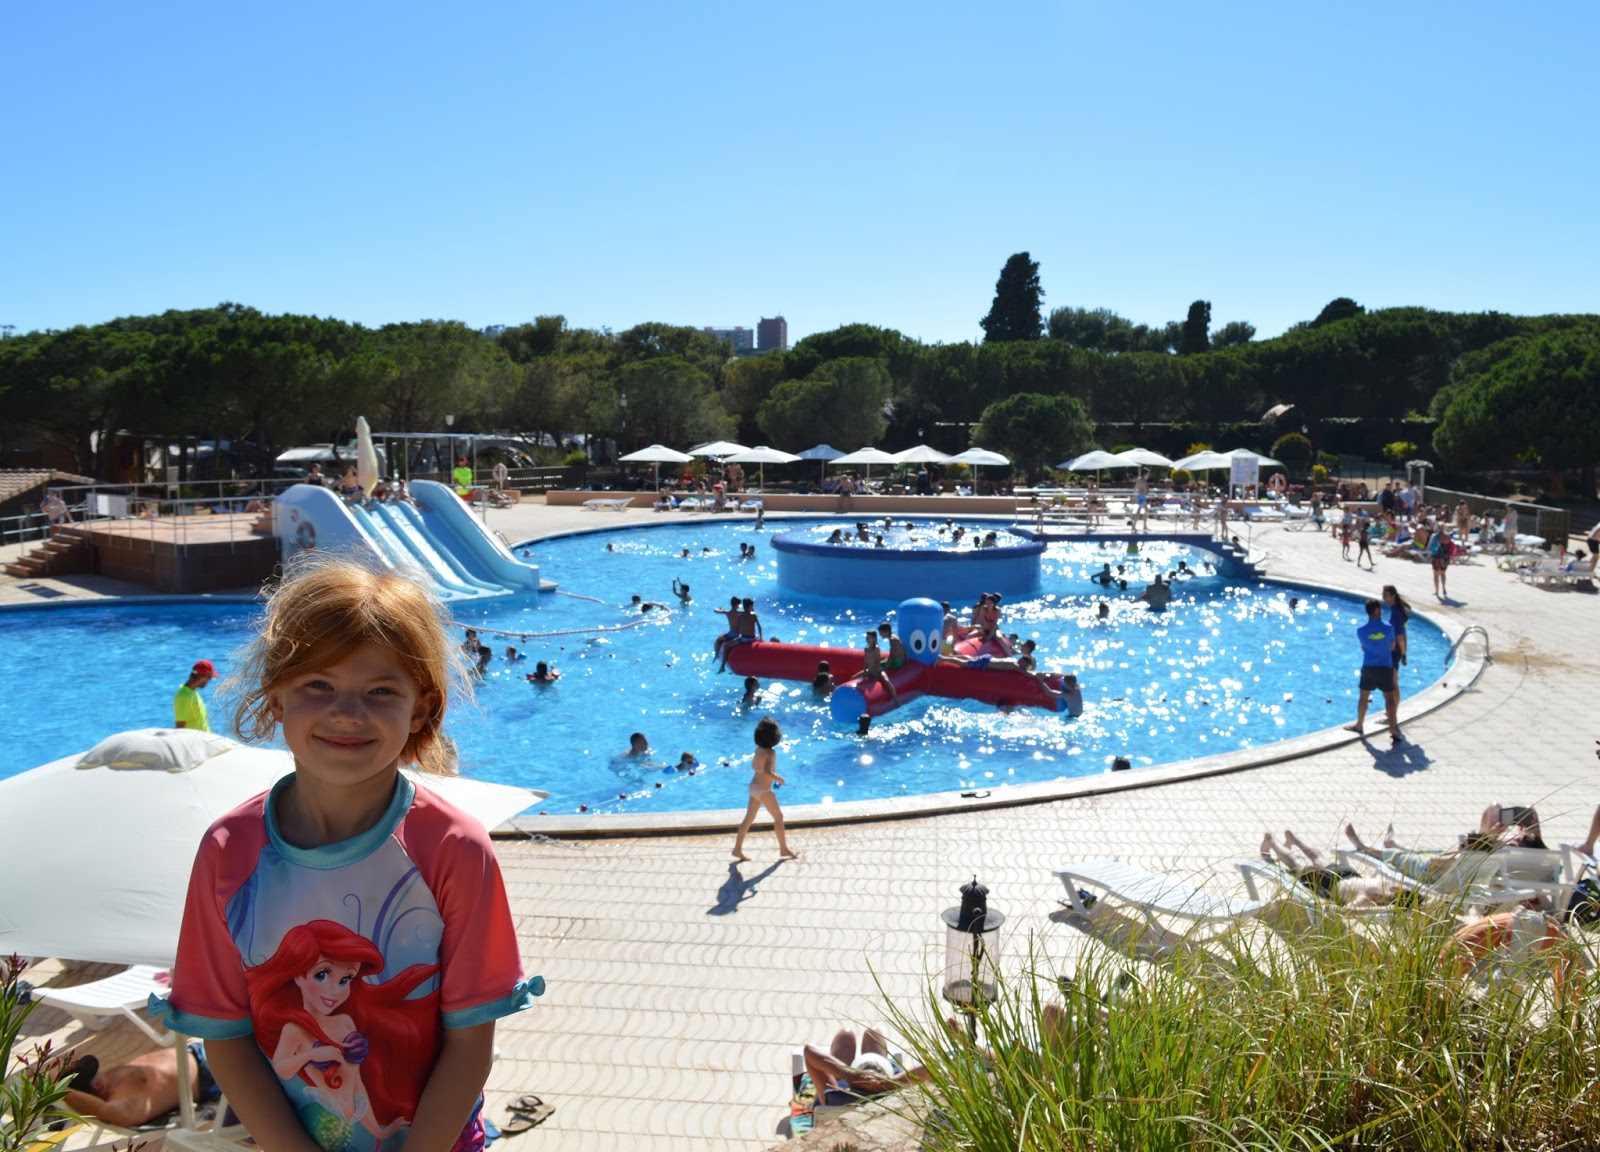 Camping La Siesta, Calella de Palafrugell, Costa Brava - a review - swimming pool